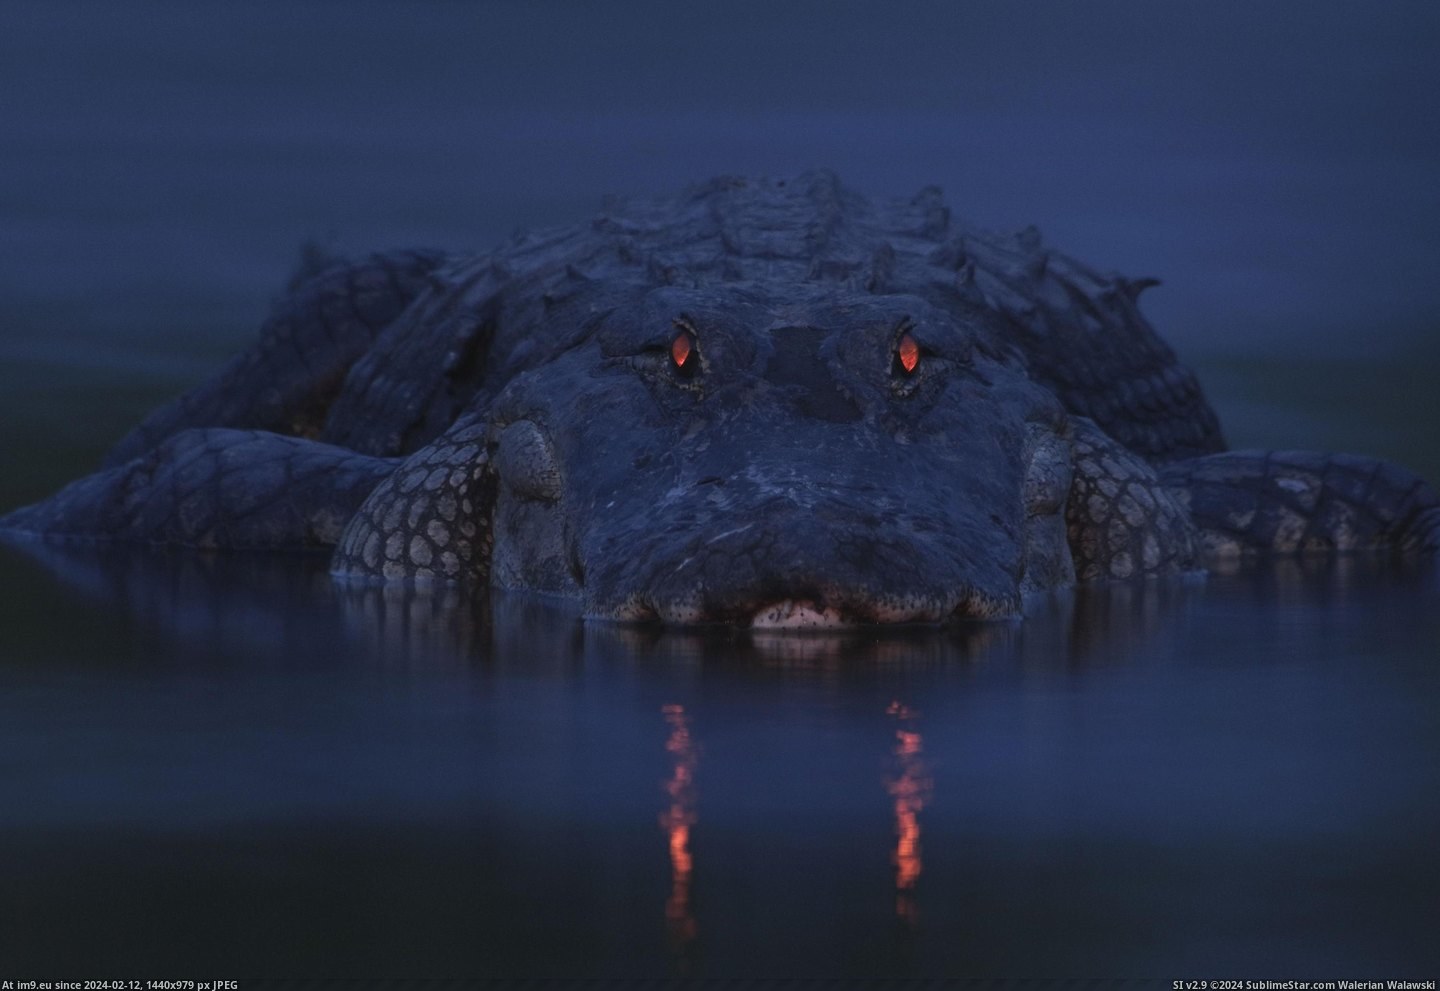 #Eyes #Alligator #Glowing #Dusk [Pics] Glowing eyes of an alligator at dusk Pic. (Obraz z album My r/PICS favs))